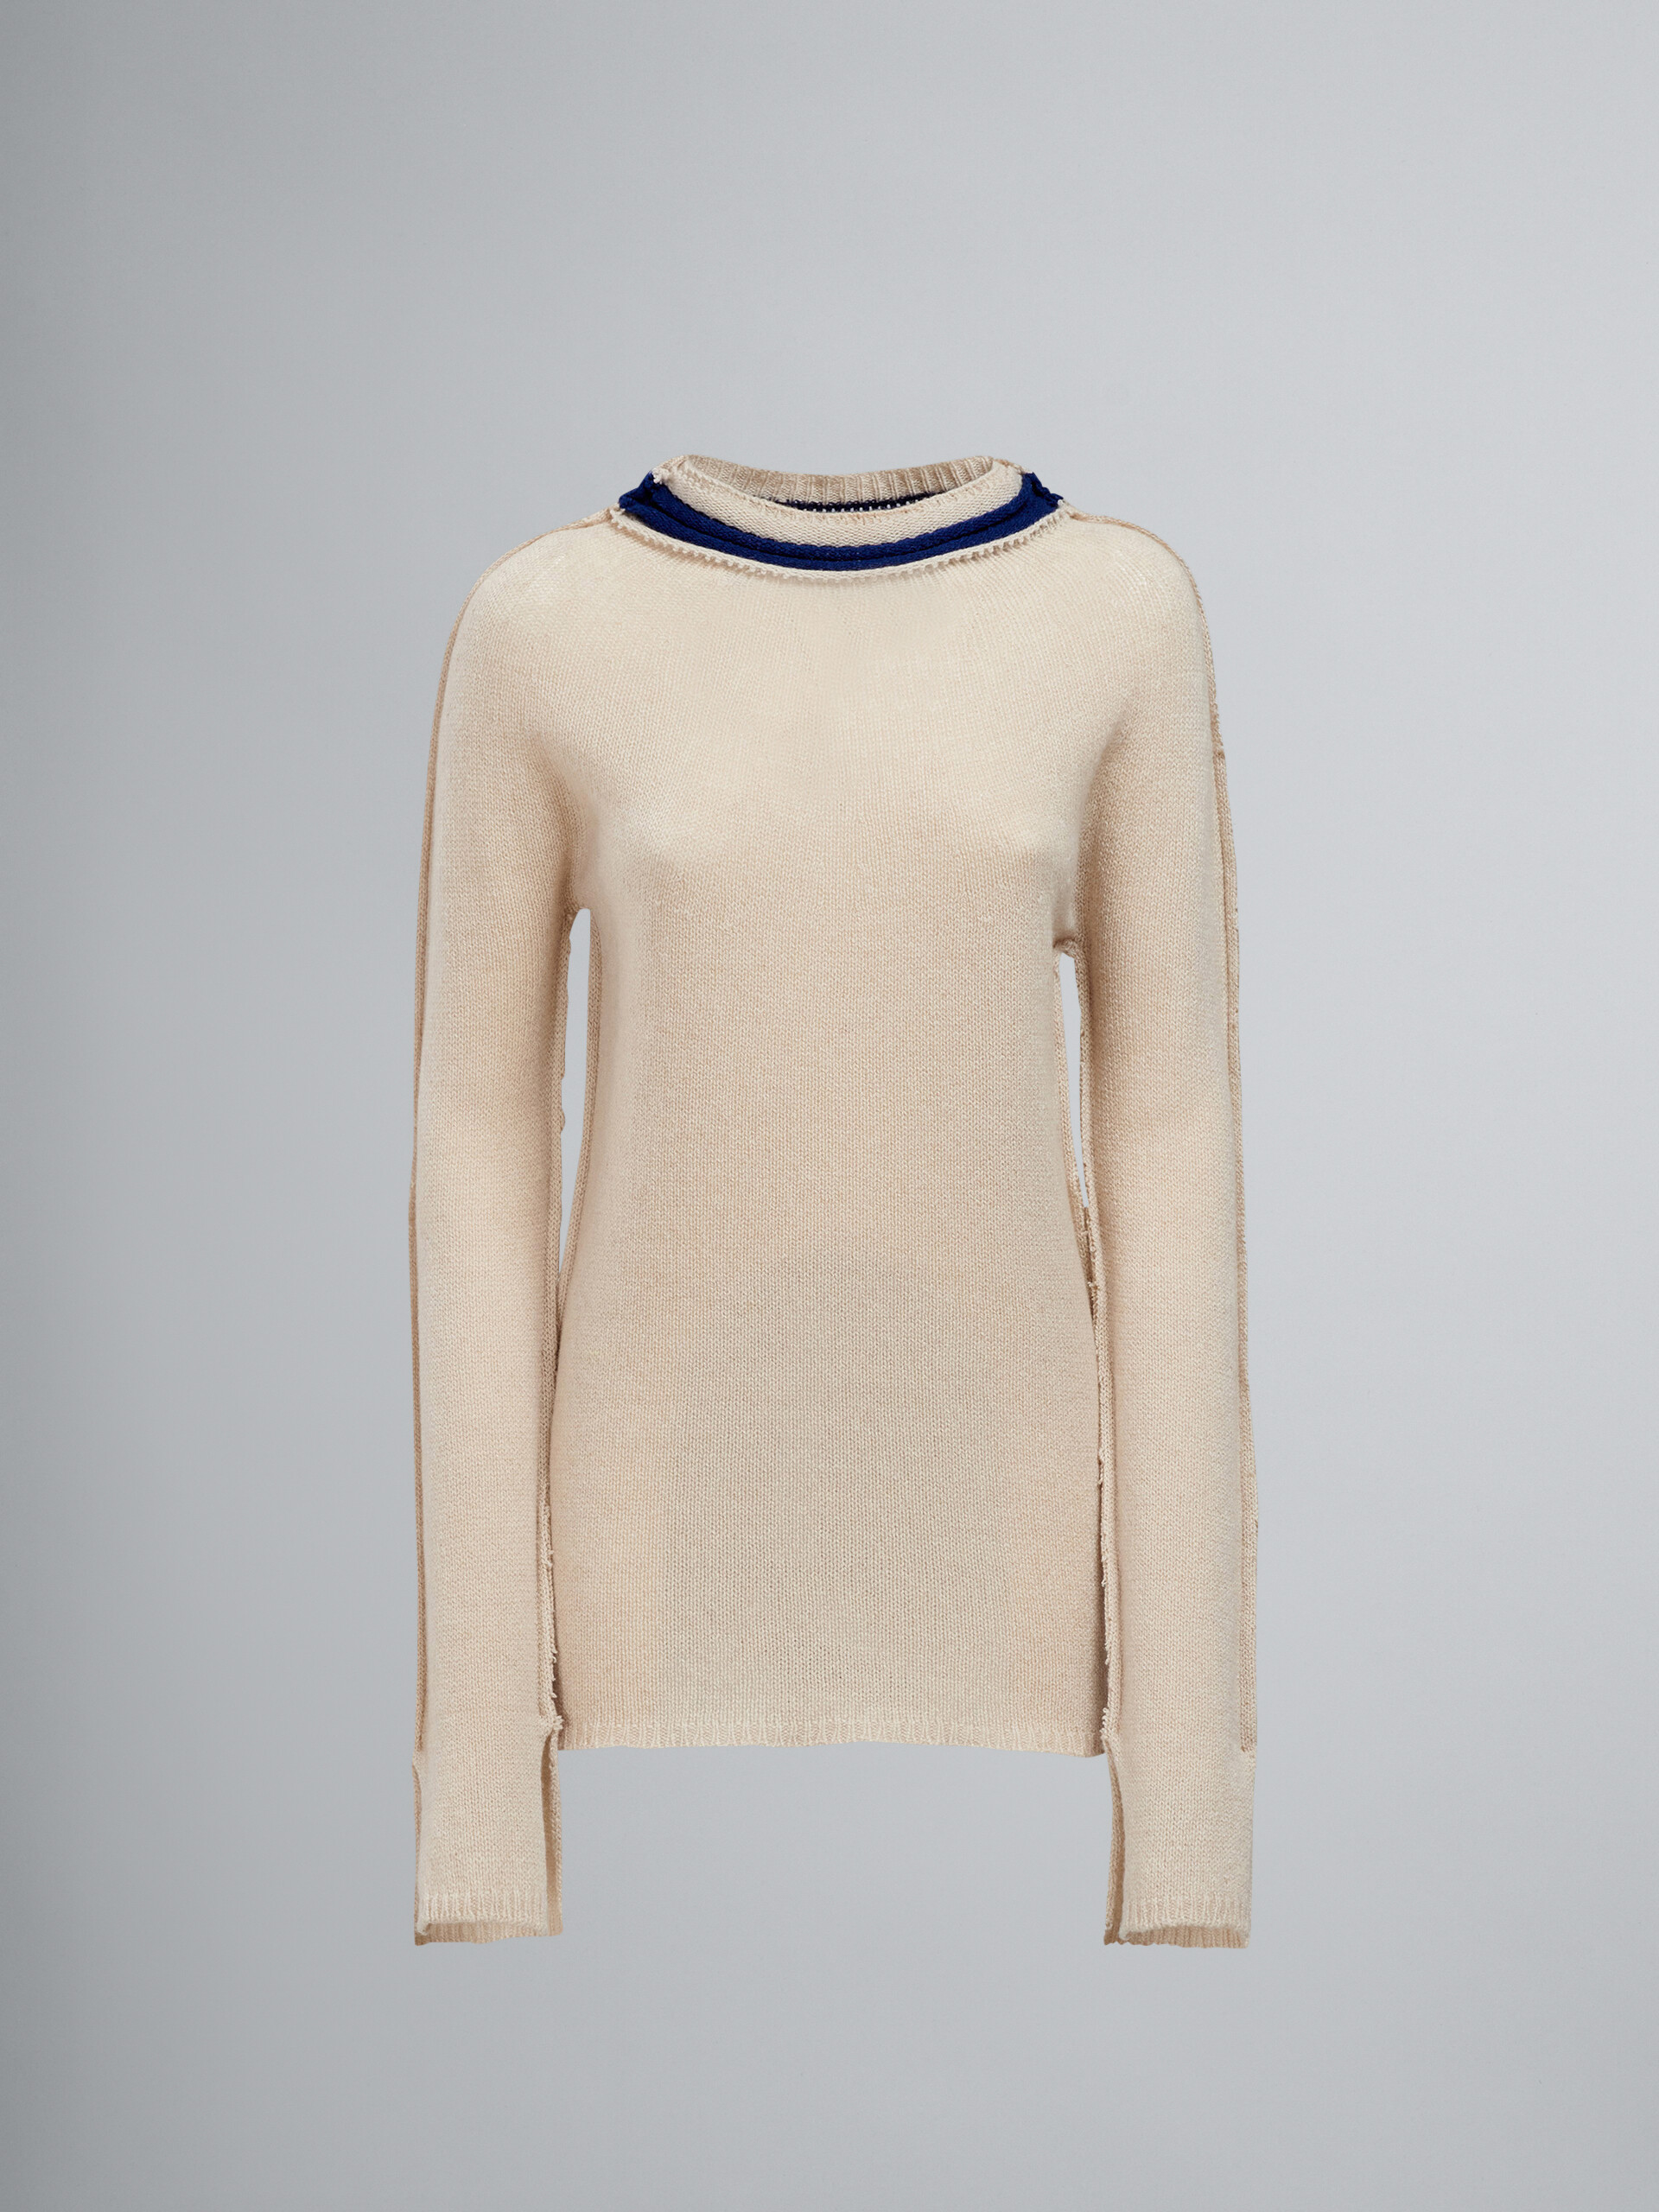 Cashwool long crewneck sweater - Pullovers - Image 1